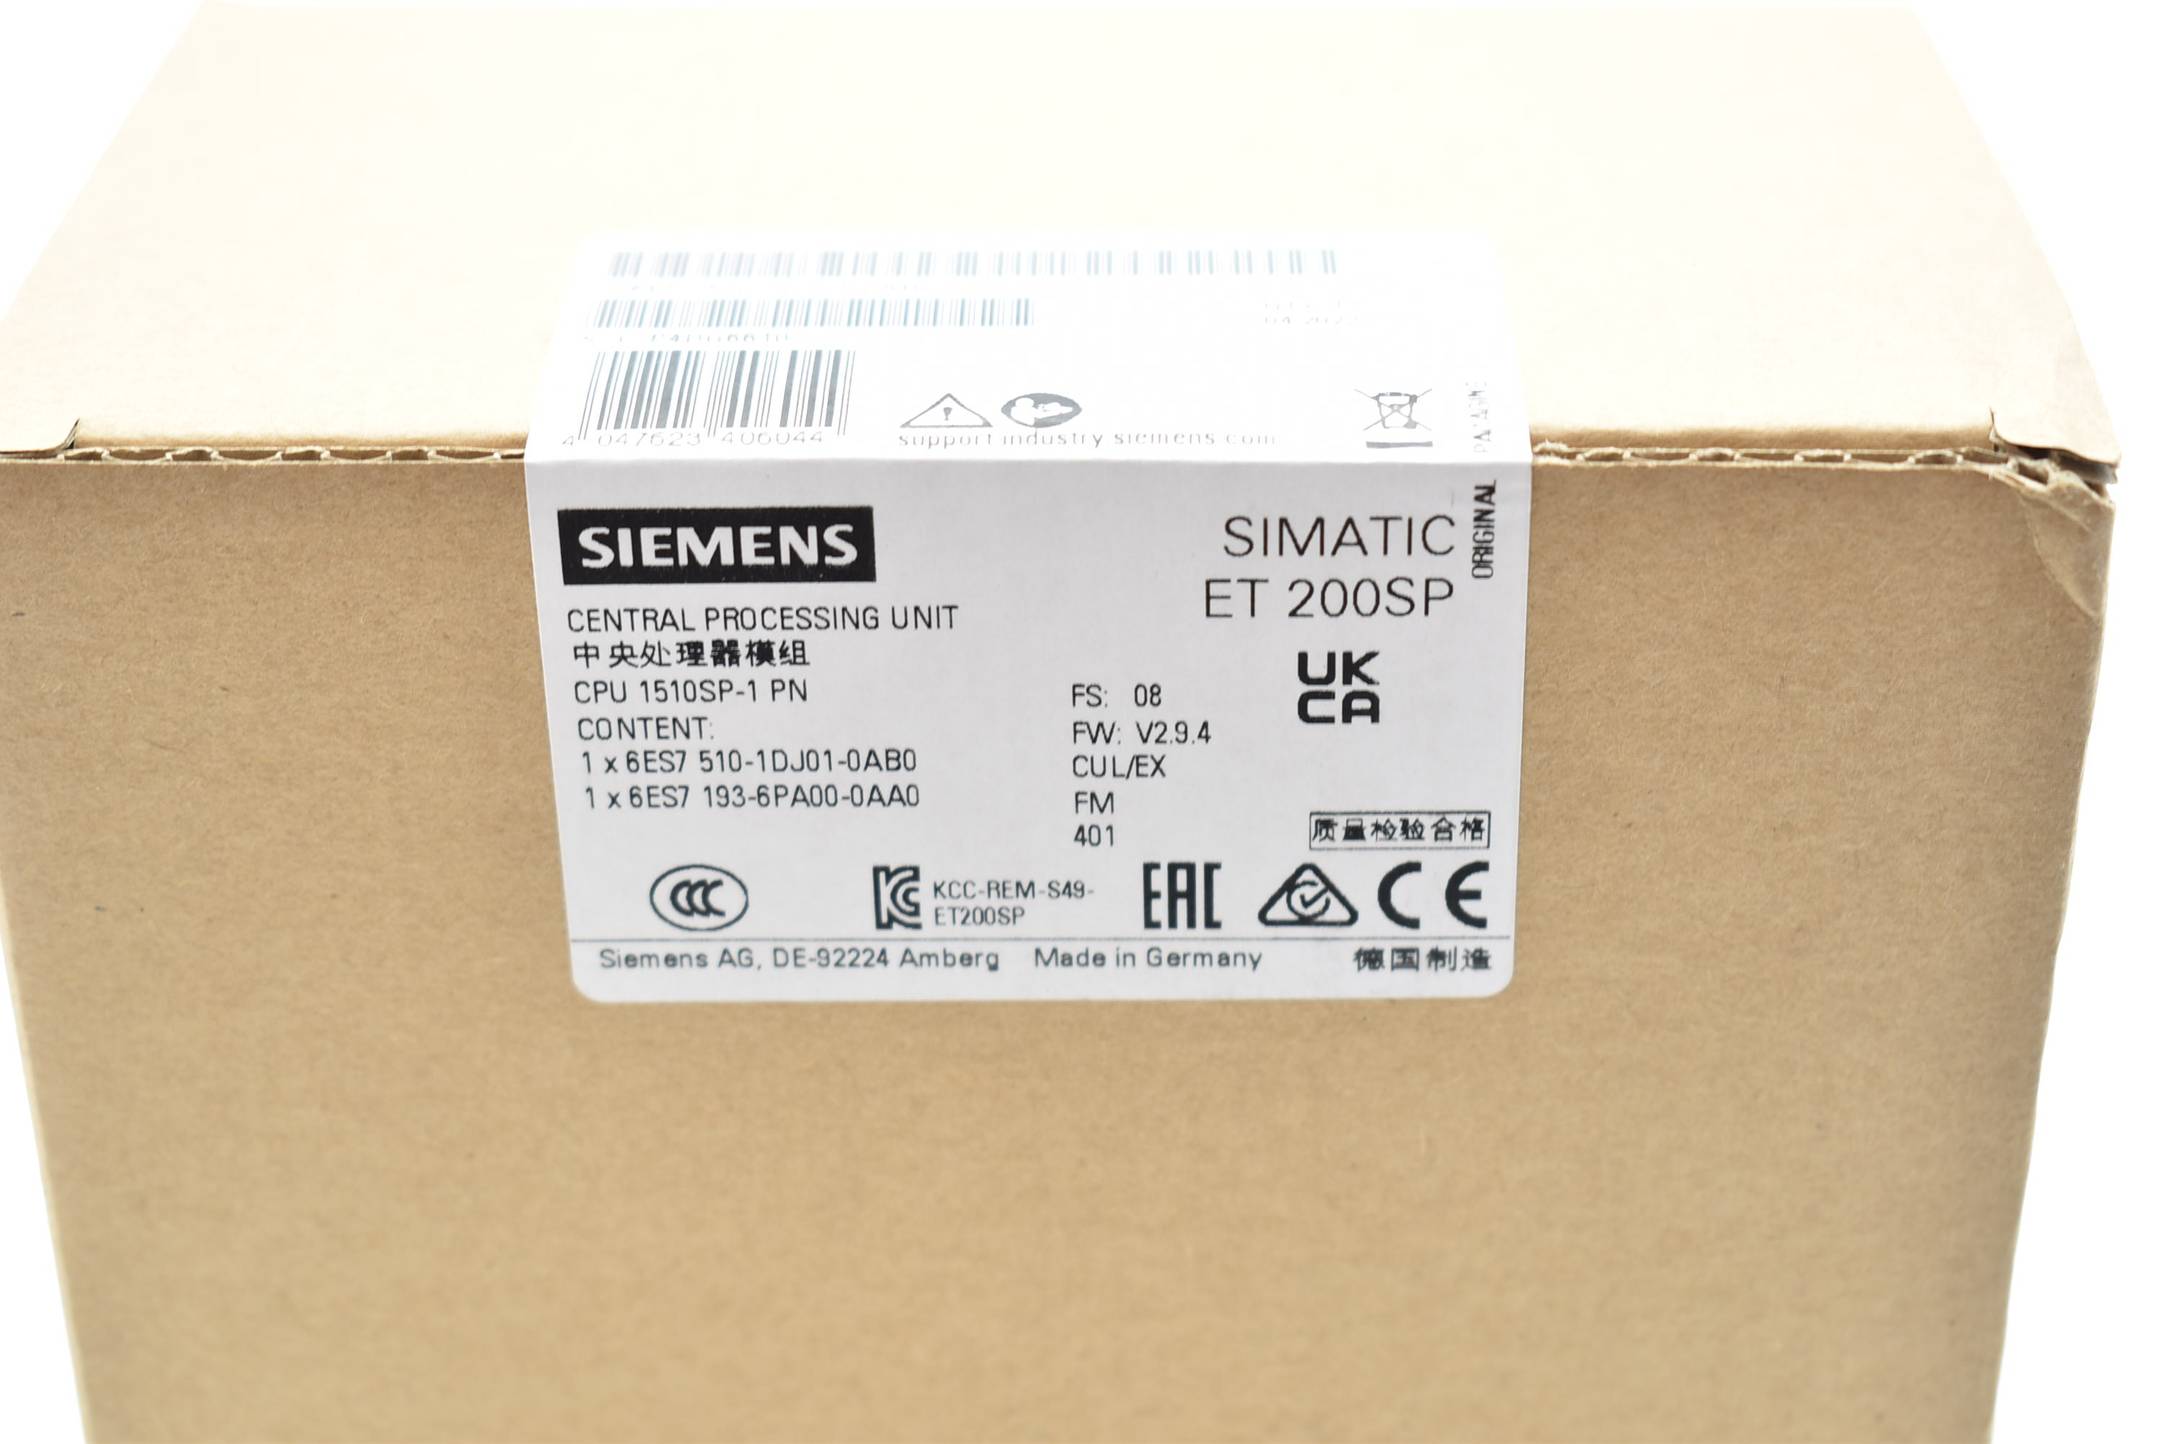 Siemens simatic ET 200SP 6ES7 510-1DJ01-0AB0 ( 6ES7510-1DJ01-0AB0 ) FS.08